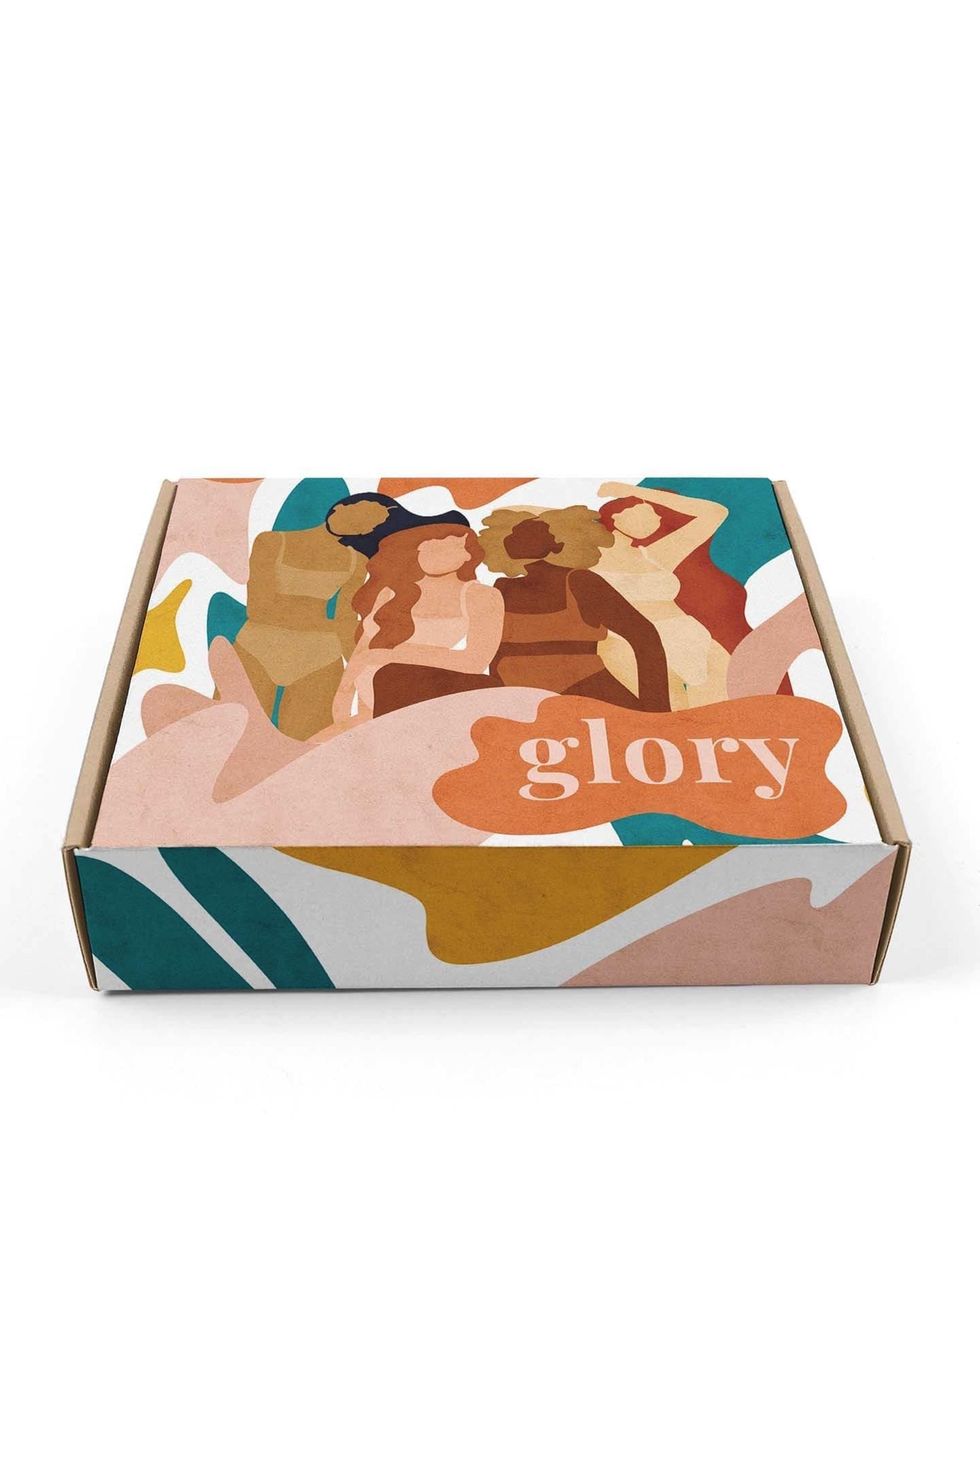 Glory Premium Box: Cleanser, Exfoliant, Toner, Moisturizer, SPF Sunscreen, Treatment Serum & Tool